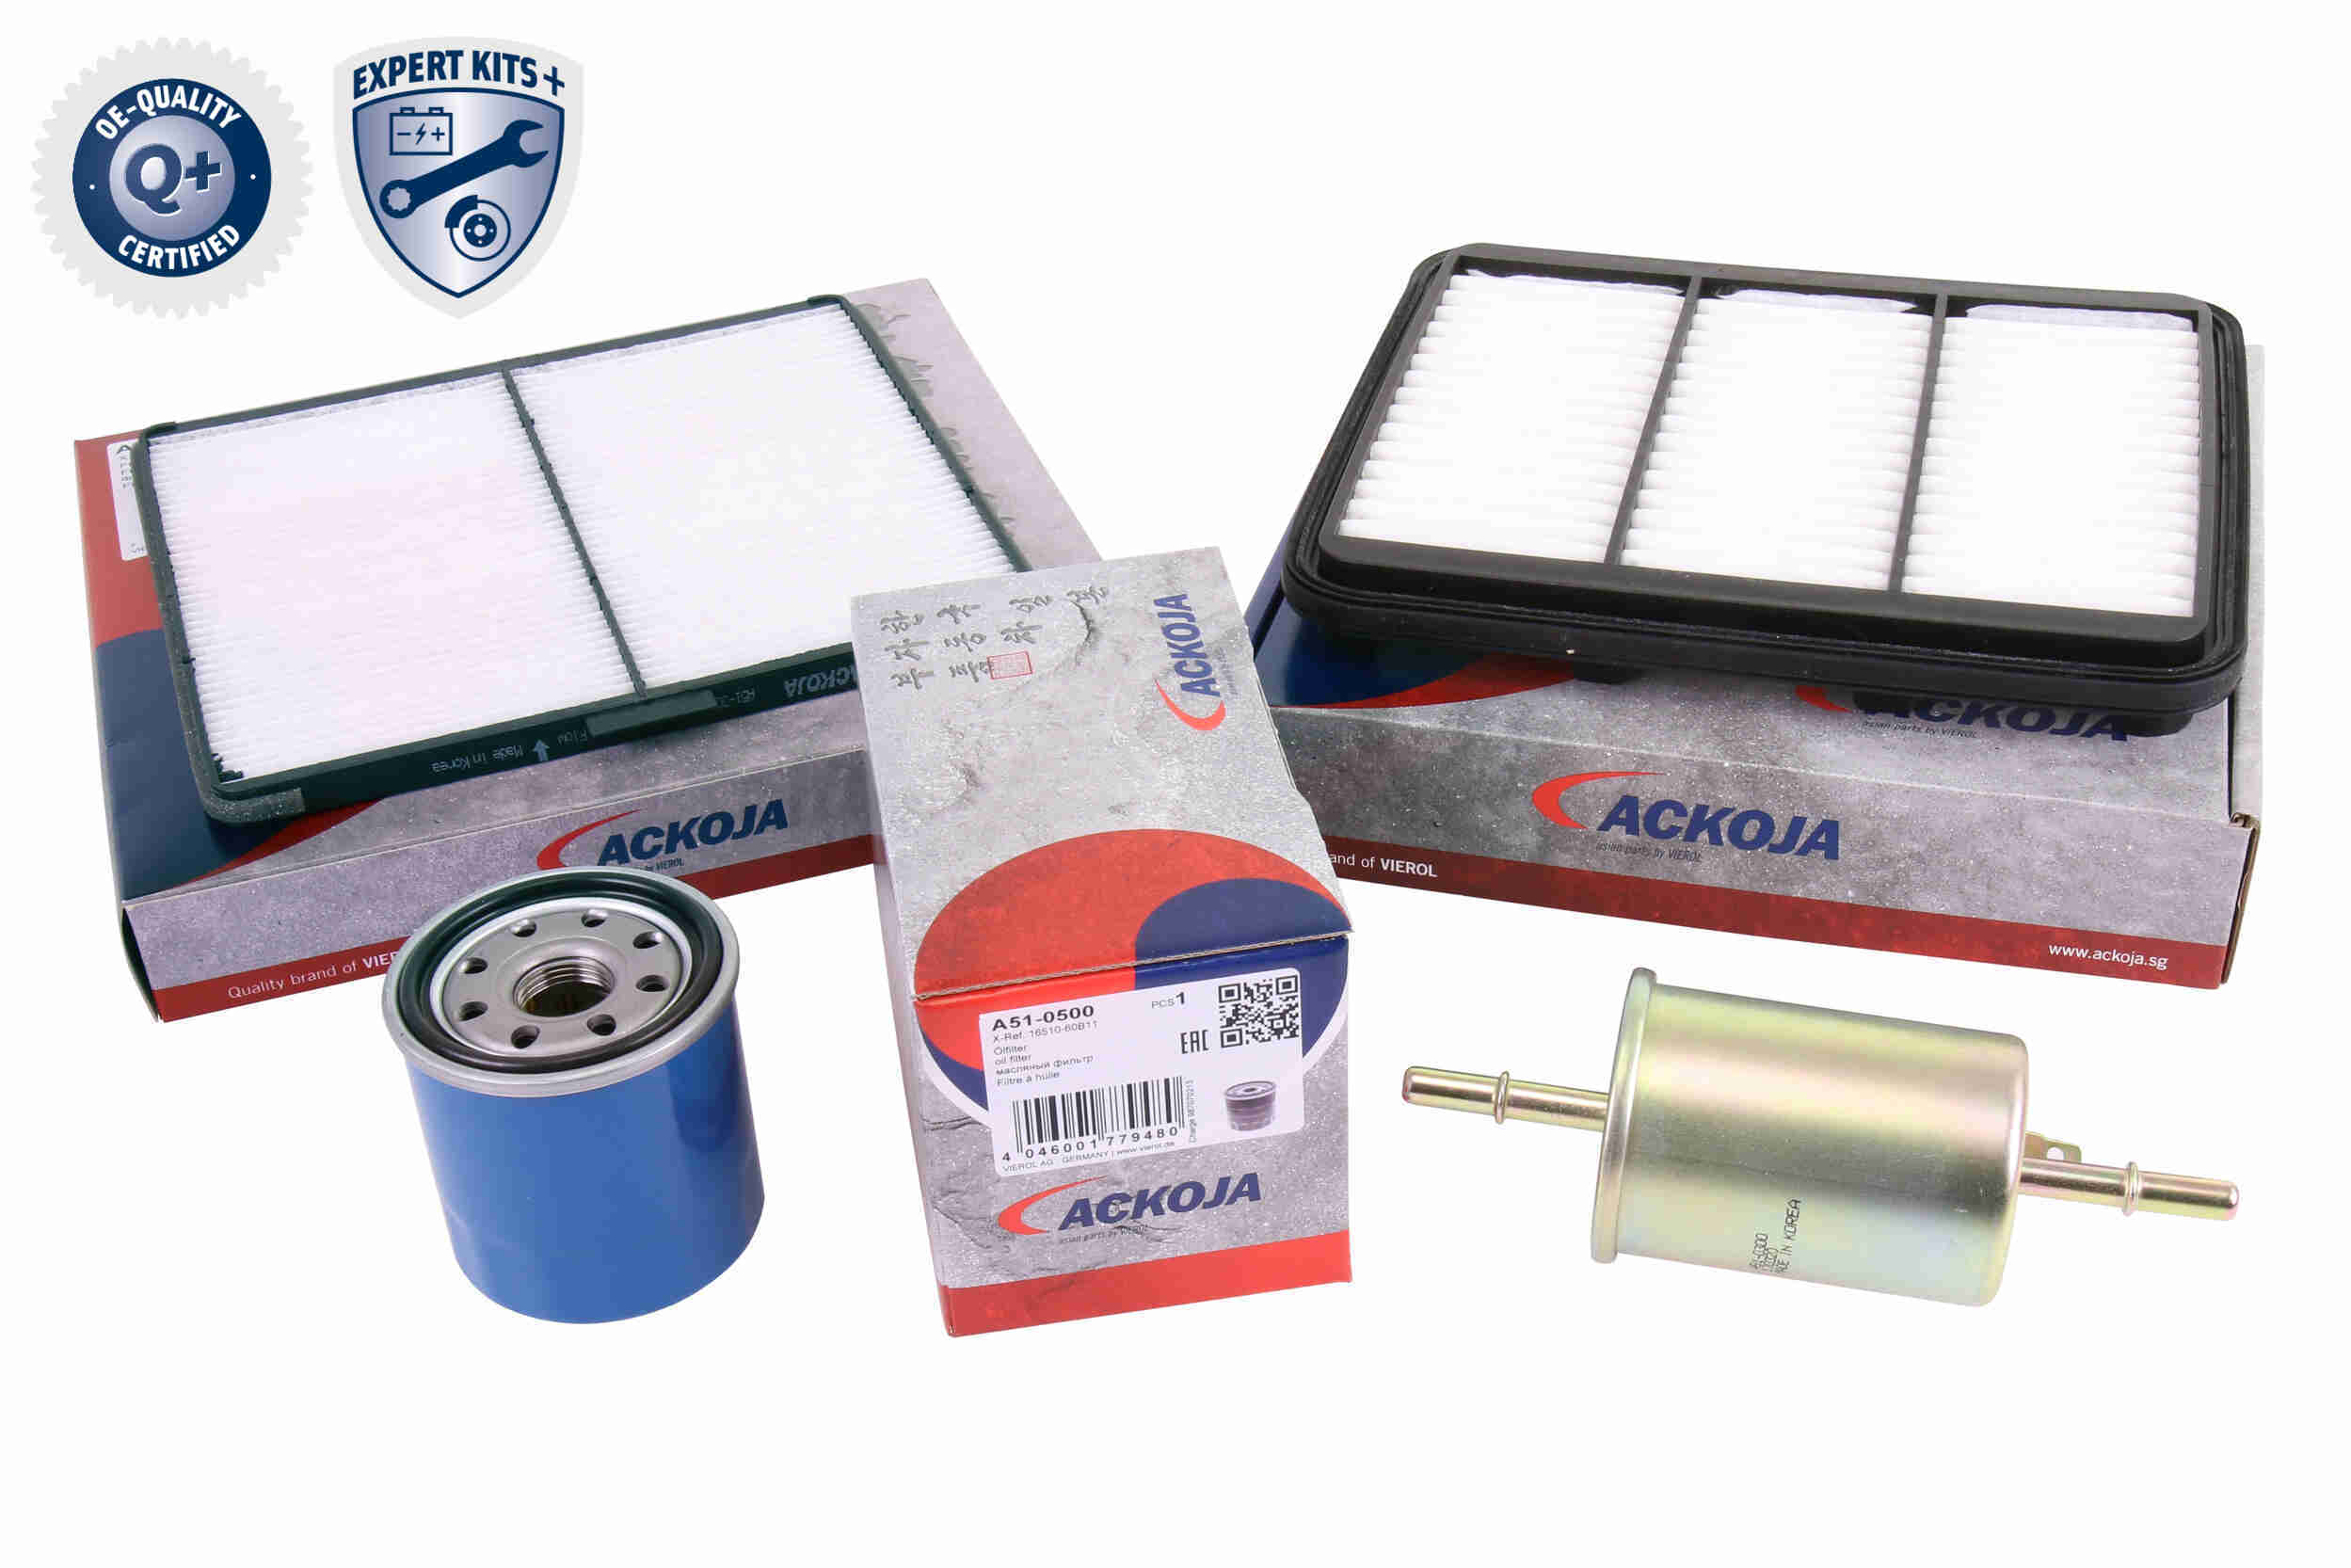 Ackoja Filterset A51-2000